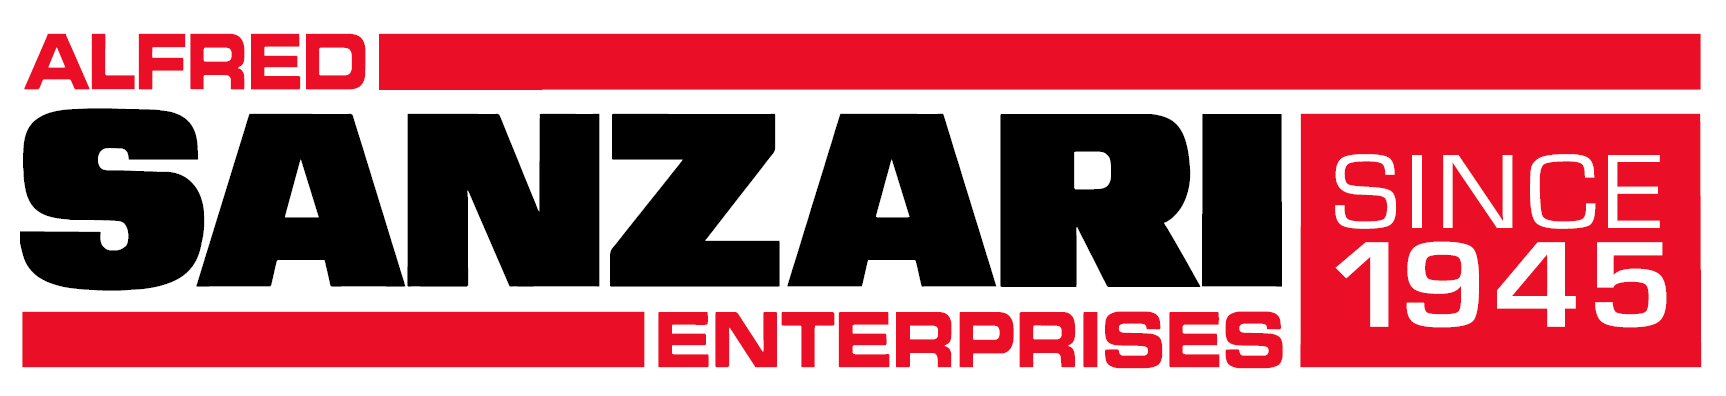 Alfred Sanzari Enterprises, Inc. - 